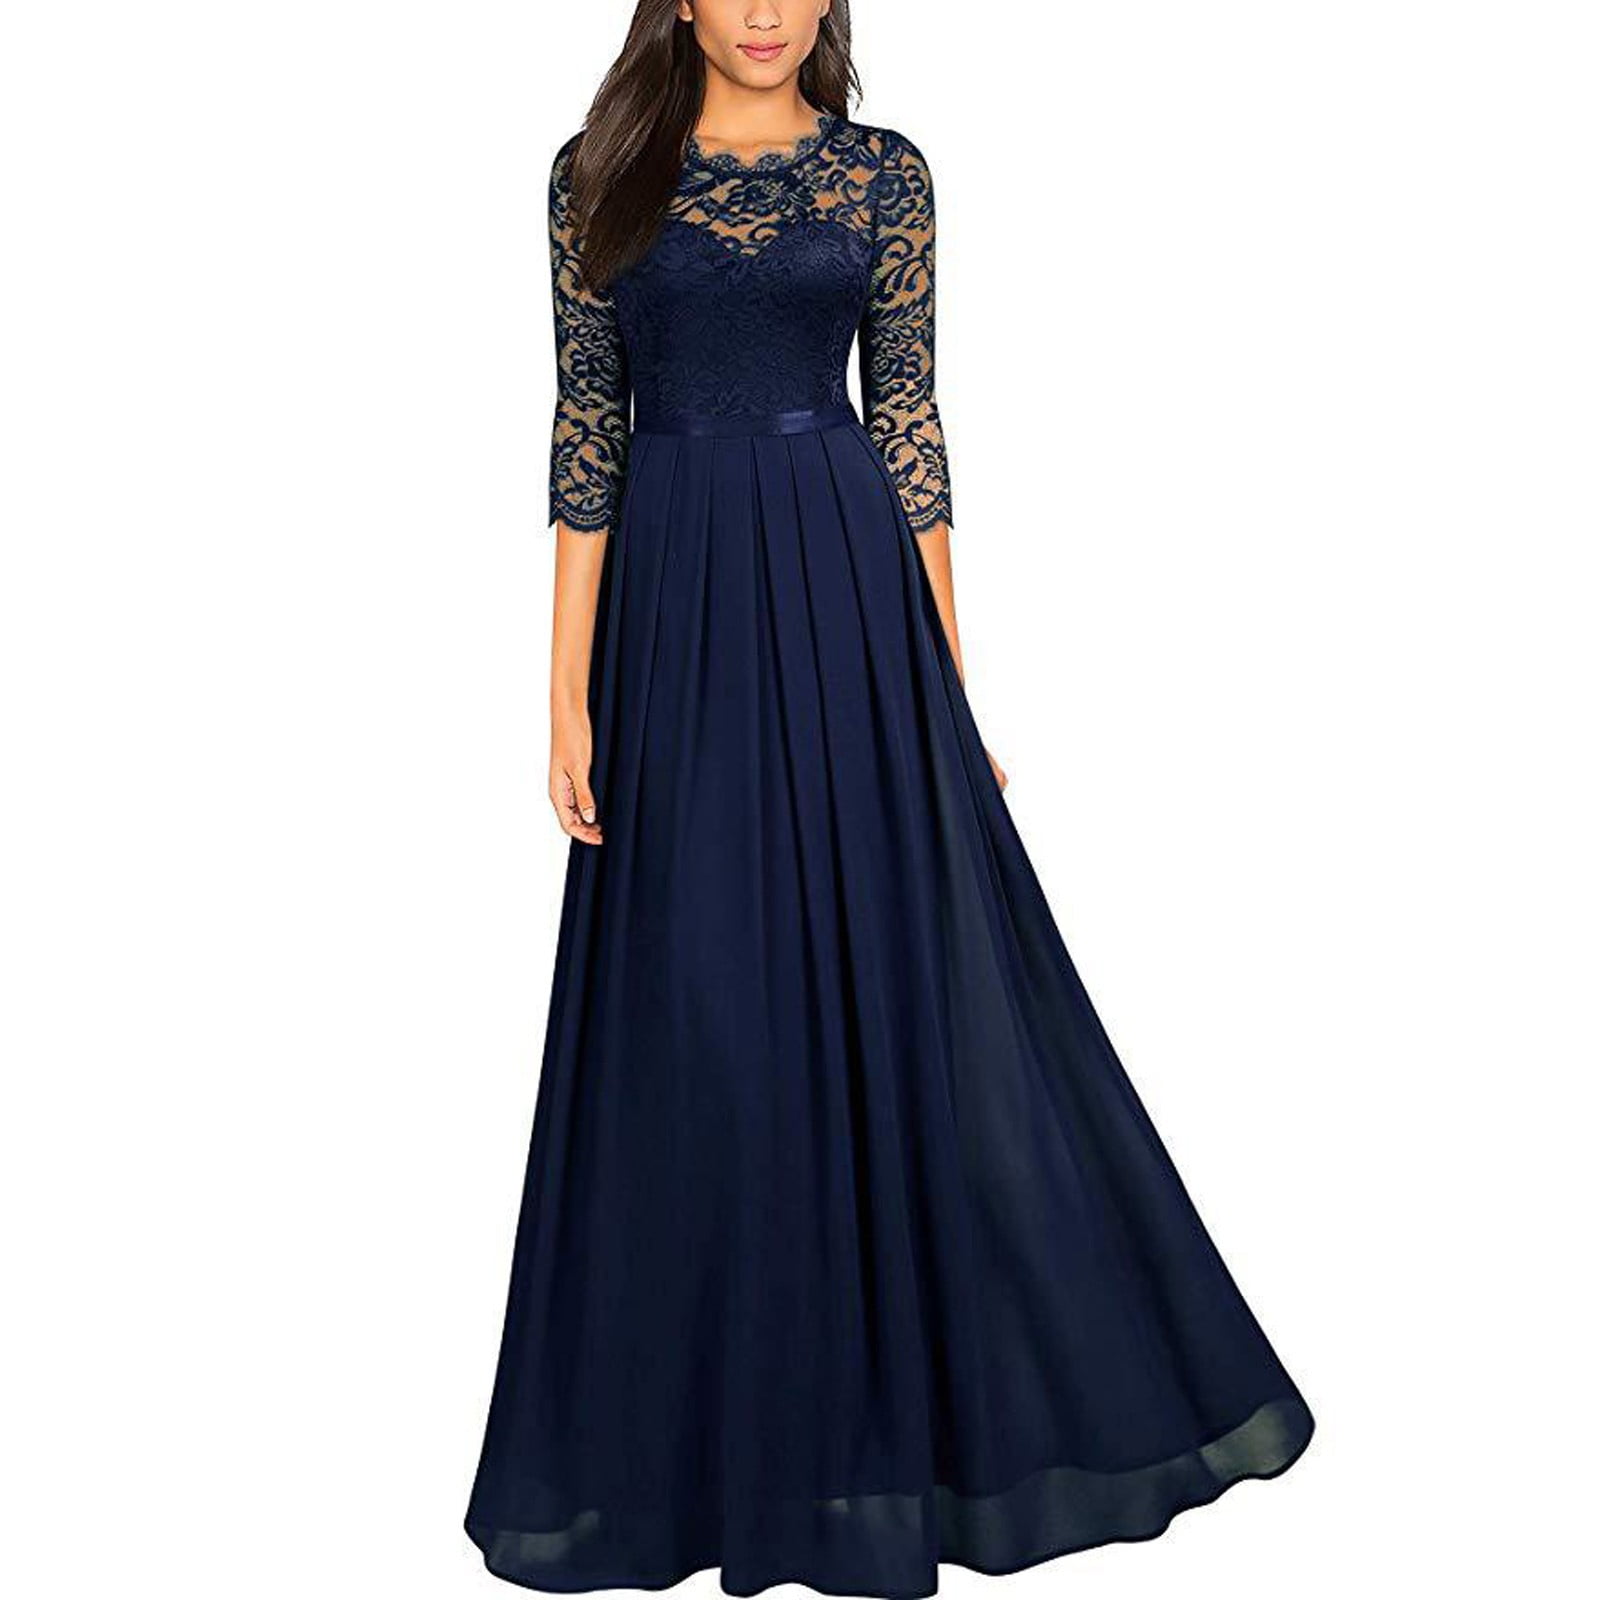 BEEYASO Dresses for Women 3/4 Sleeve Solid Clearance Maxi Evening Gown  Round Neckline Summer Dress Dark Blue L